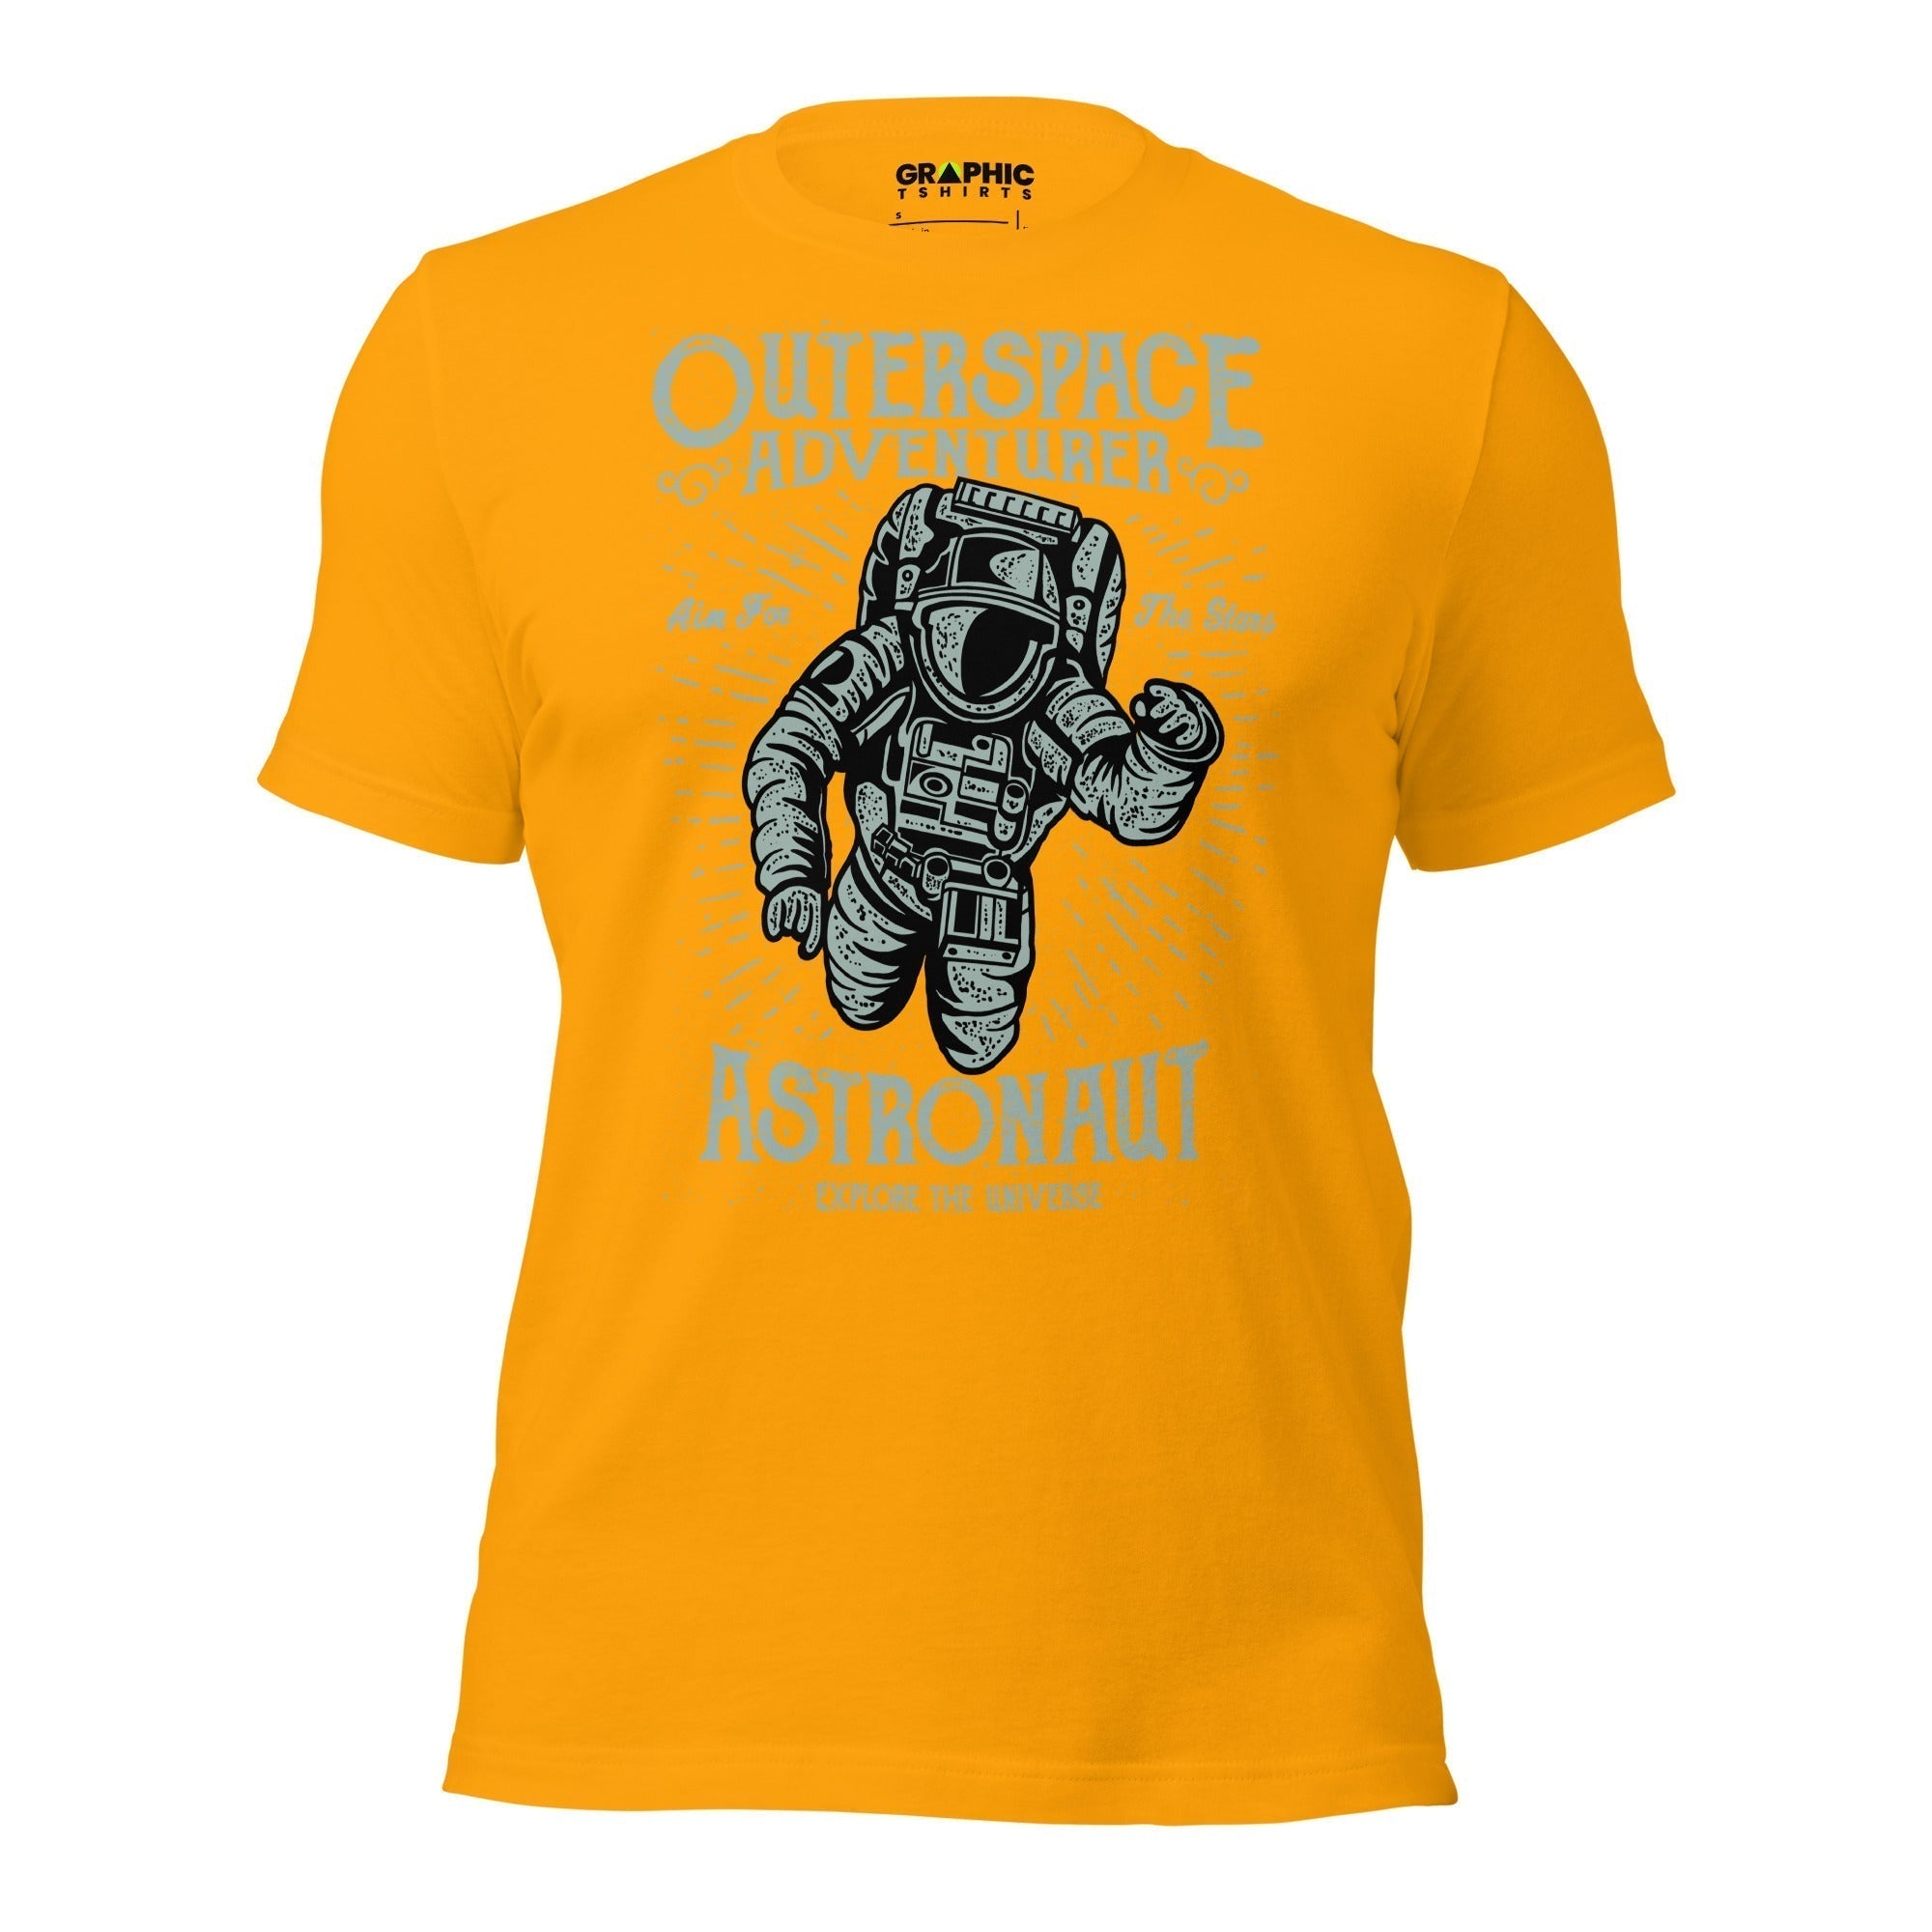 Unisex Staple T-Shirt - Outerspace Adventurer Aim For The Stars Astronaut Explore The Universe - GRAPHIC T-SHIRTS